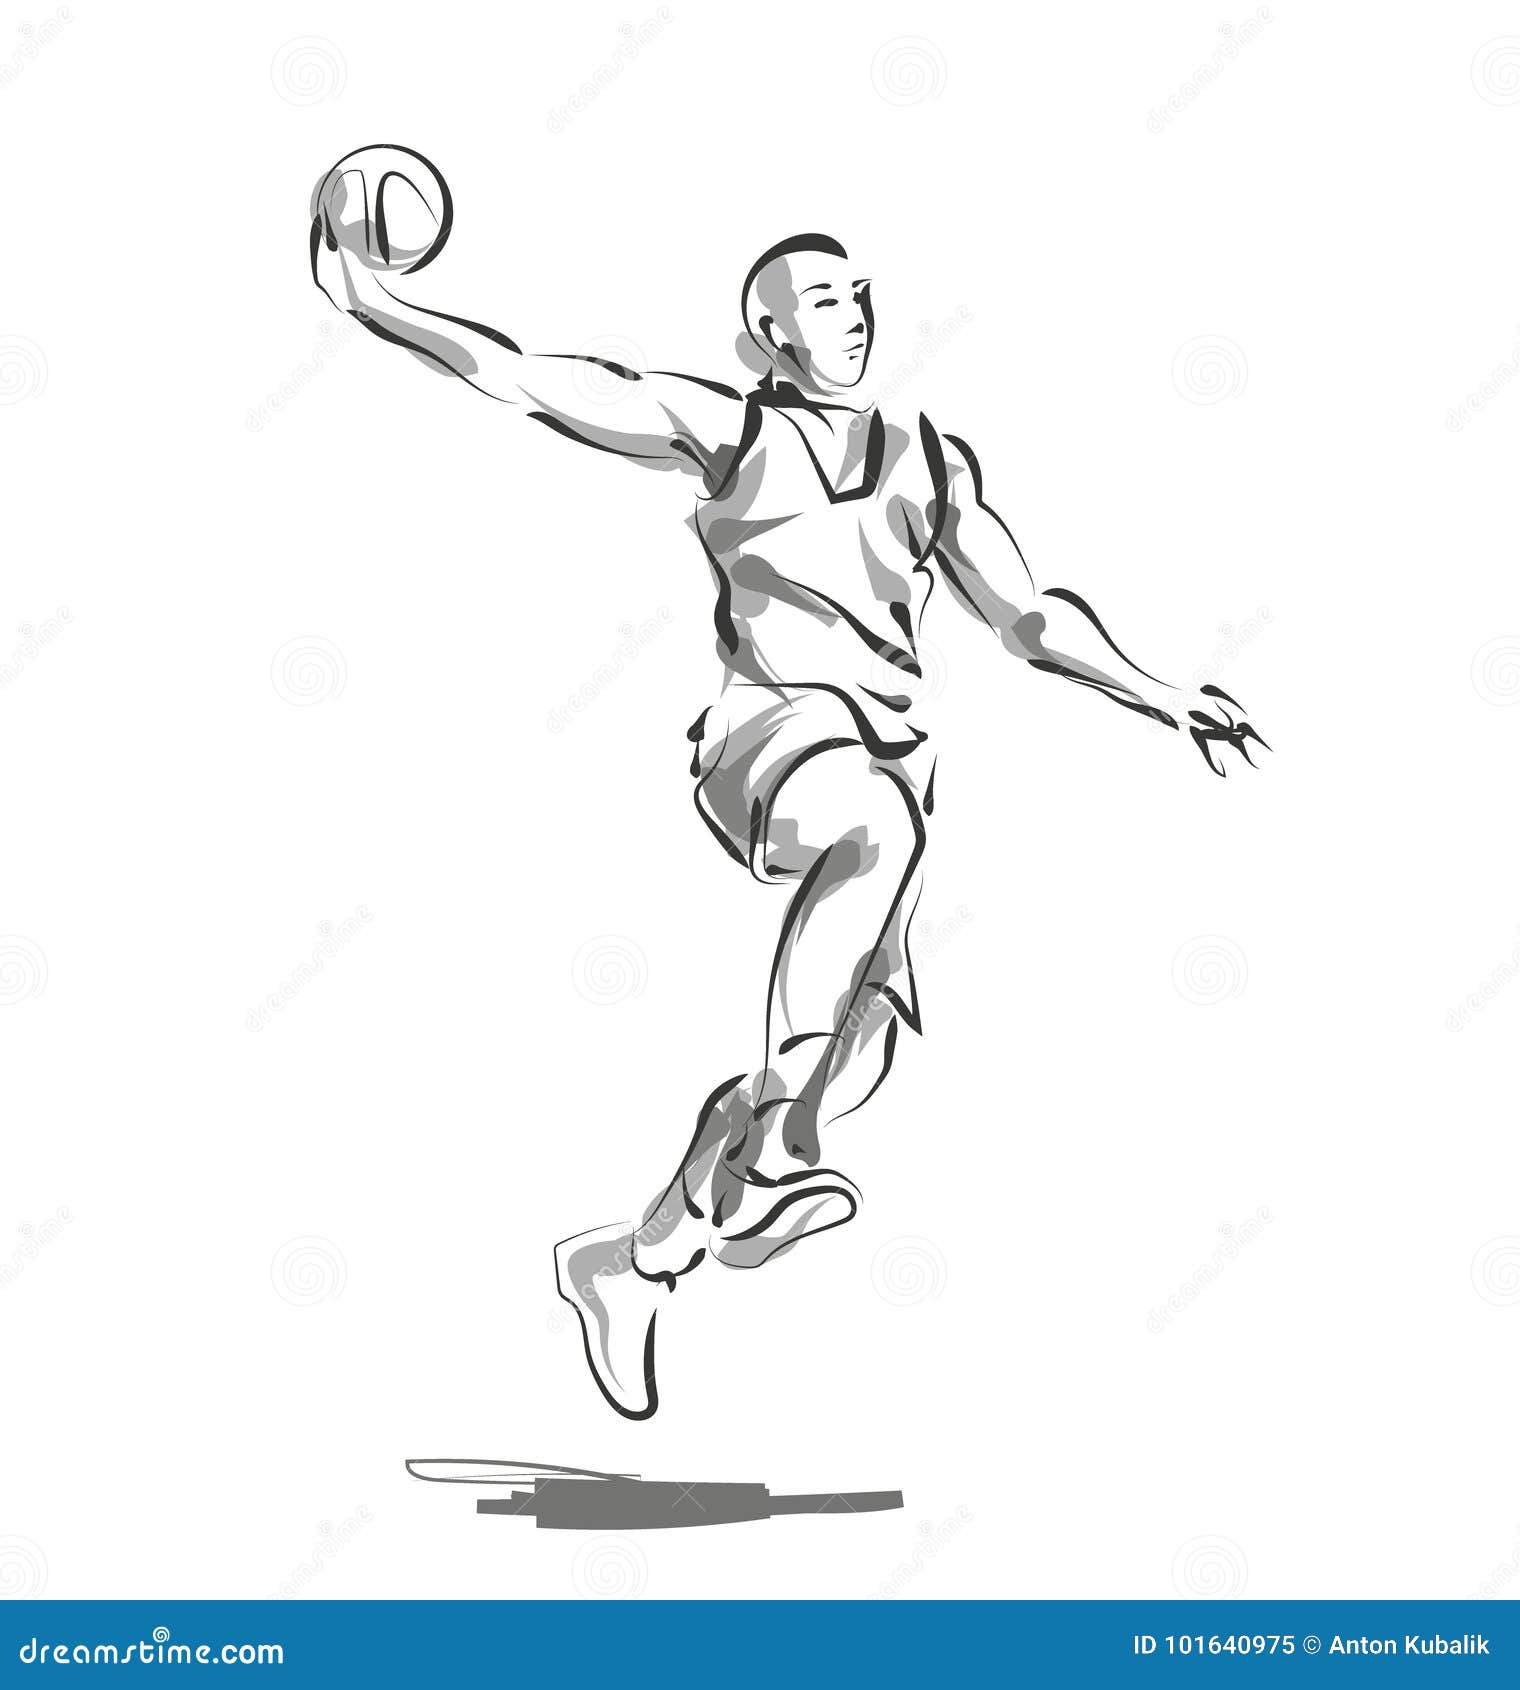 Vector Line Sketch Basketball Player Stock Vector - Illustration of ...